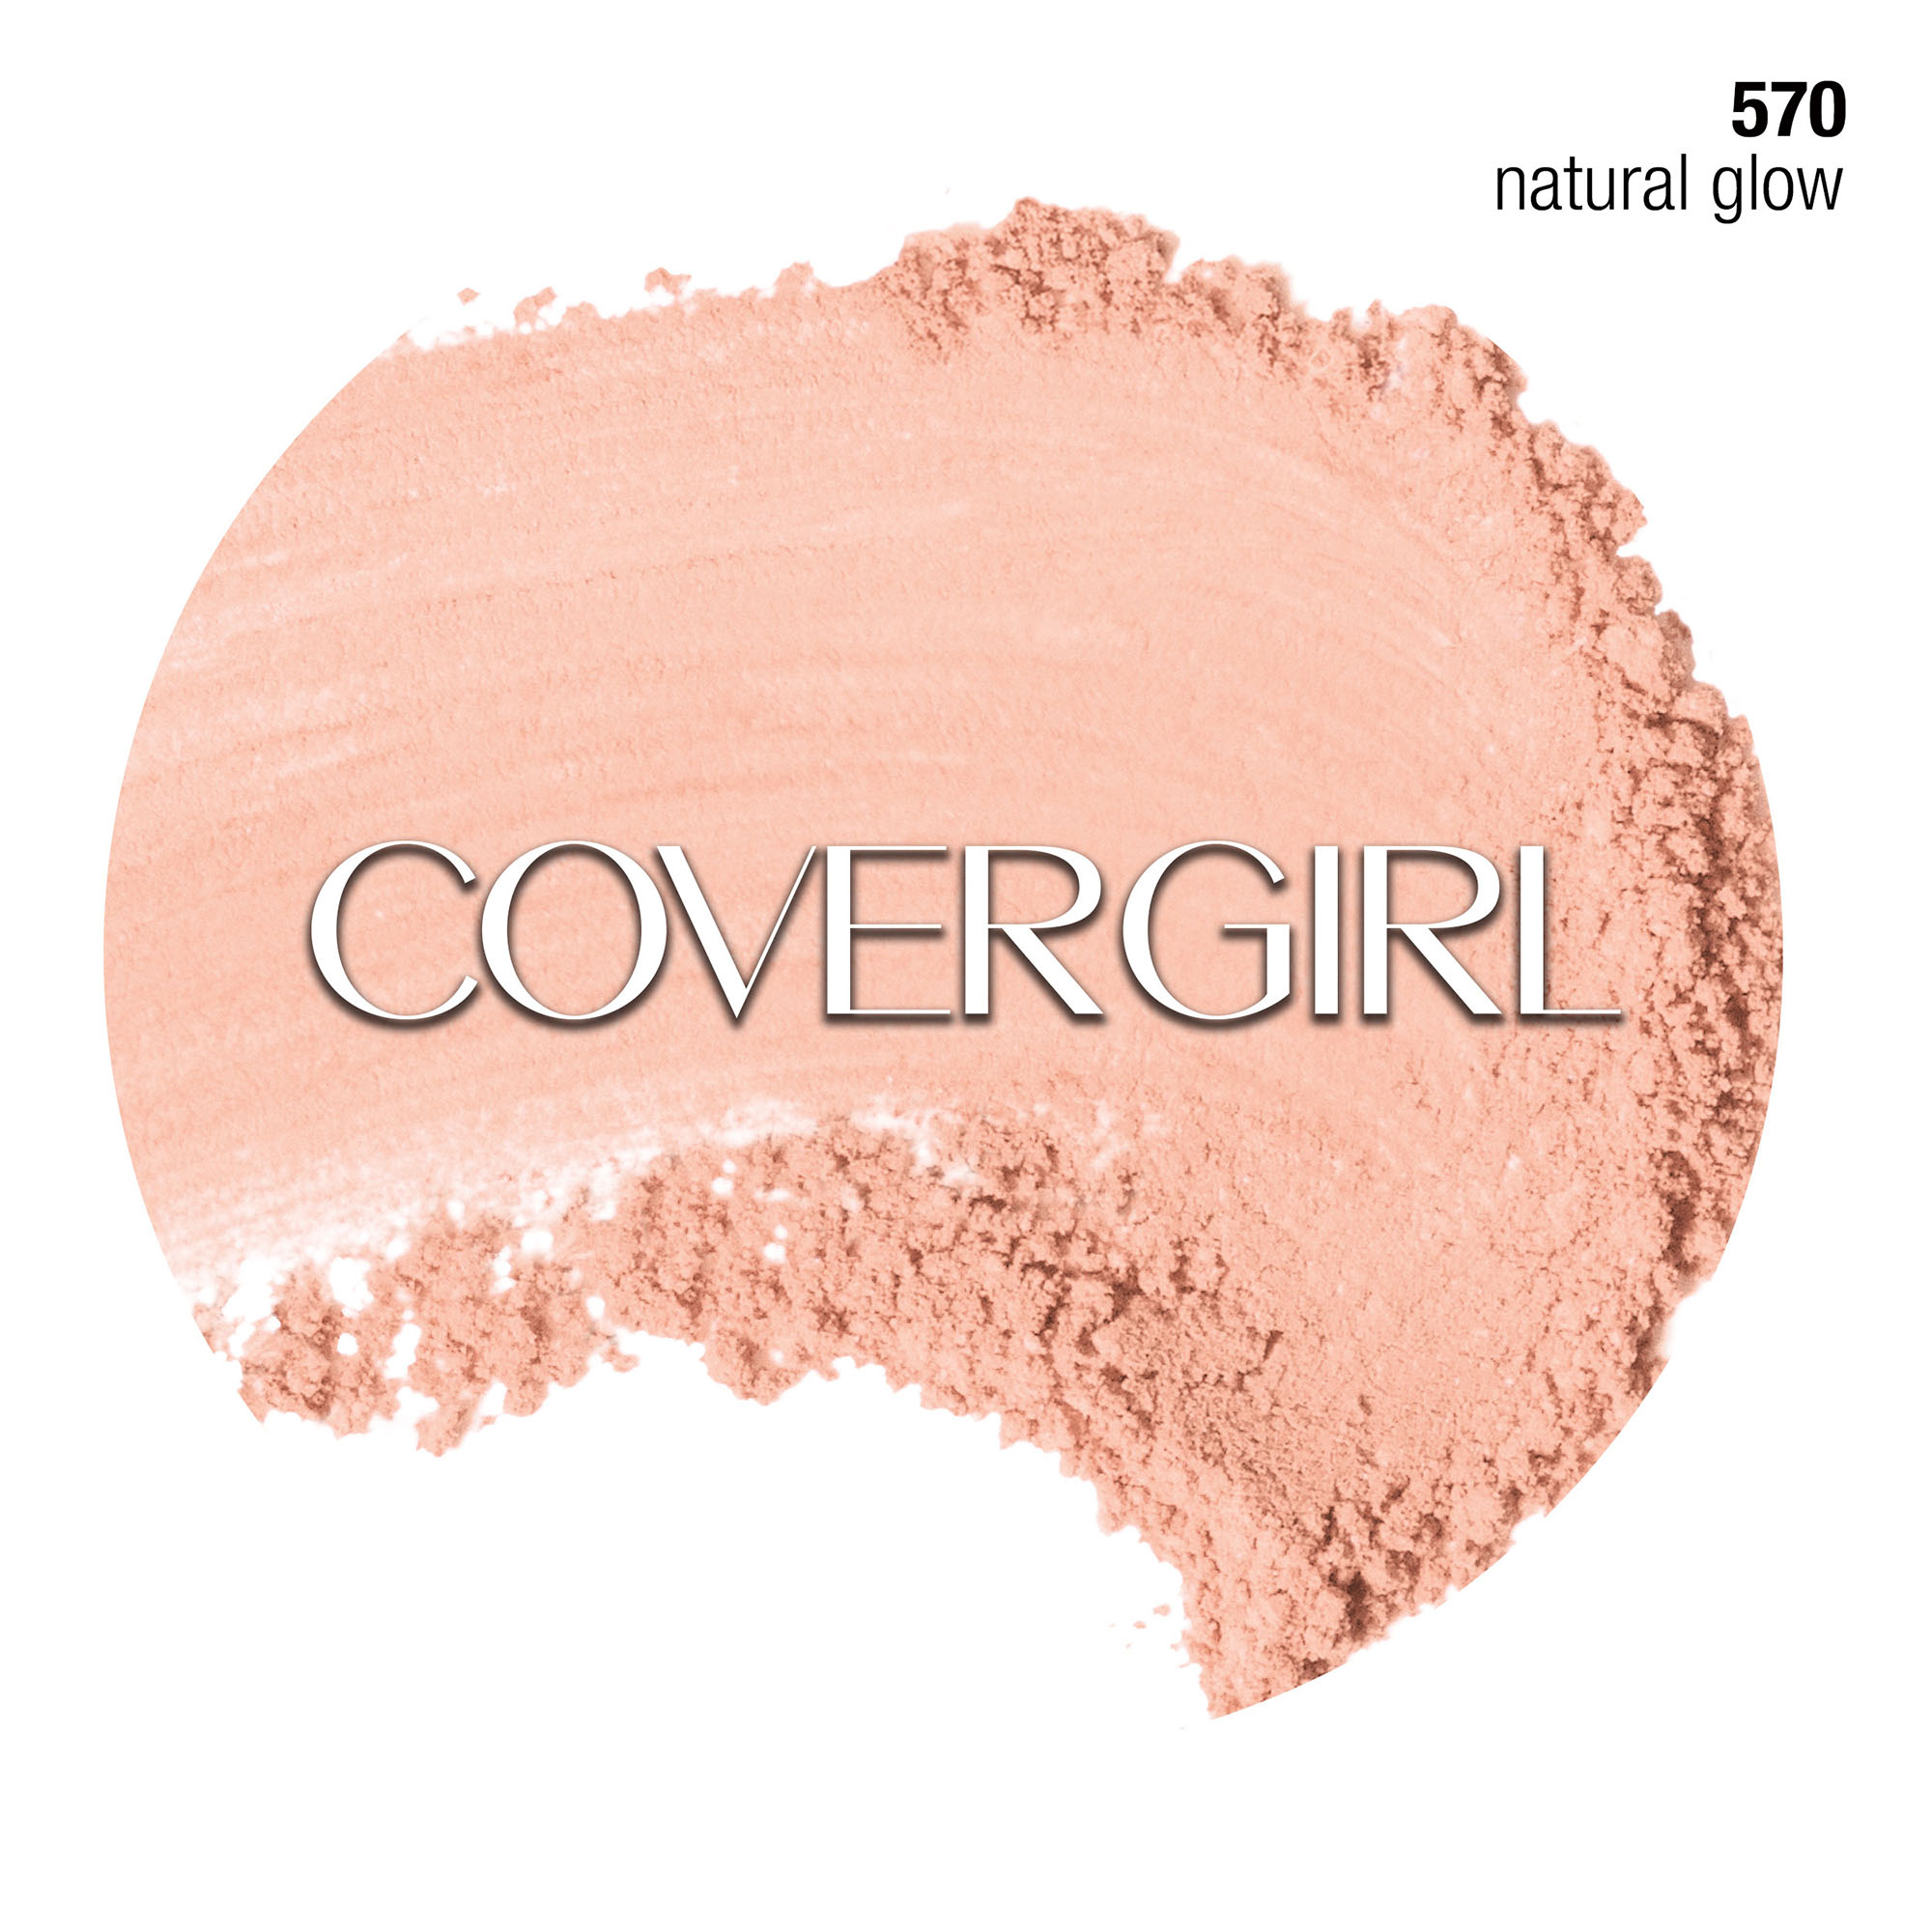 COVERGIRL Classic Color Powder Blush, 570 Natural Glow, 0.3 oz ...